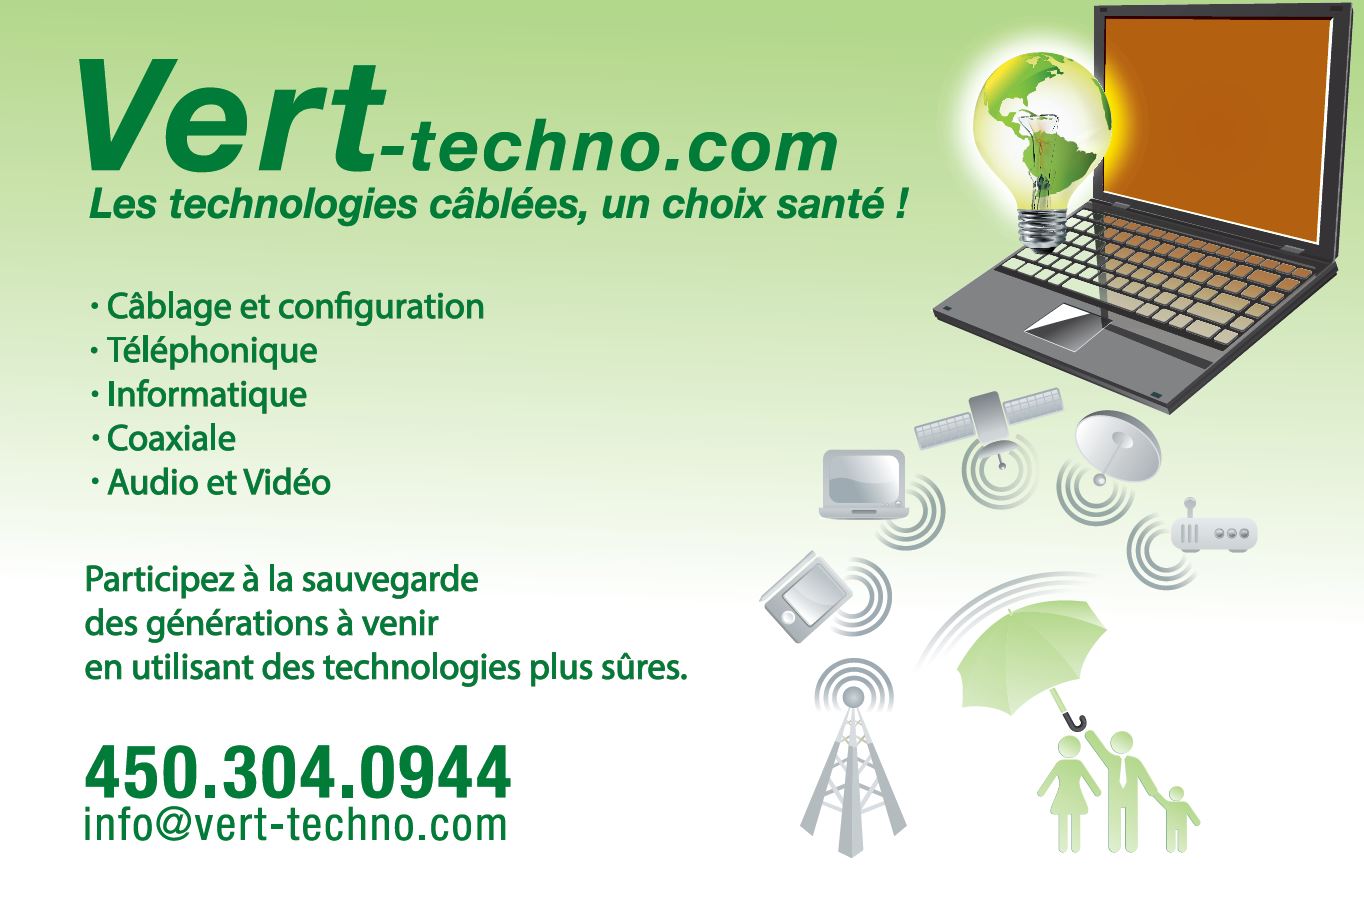 Boutique Vert-techno.com